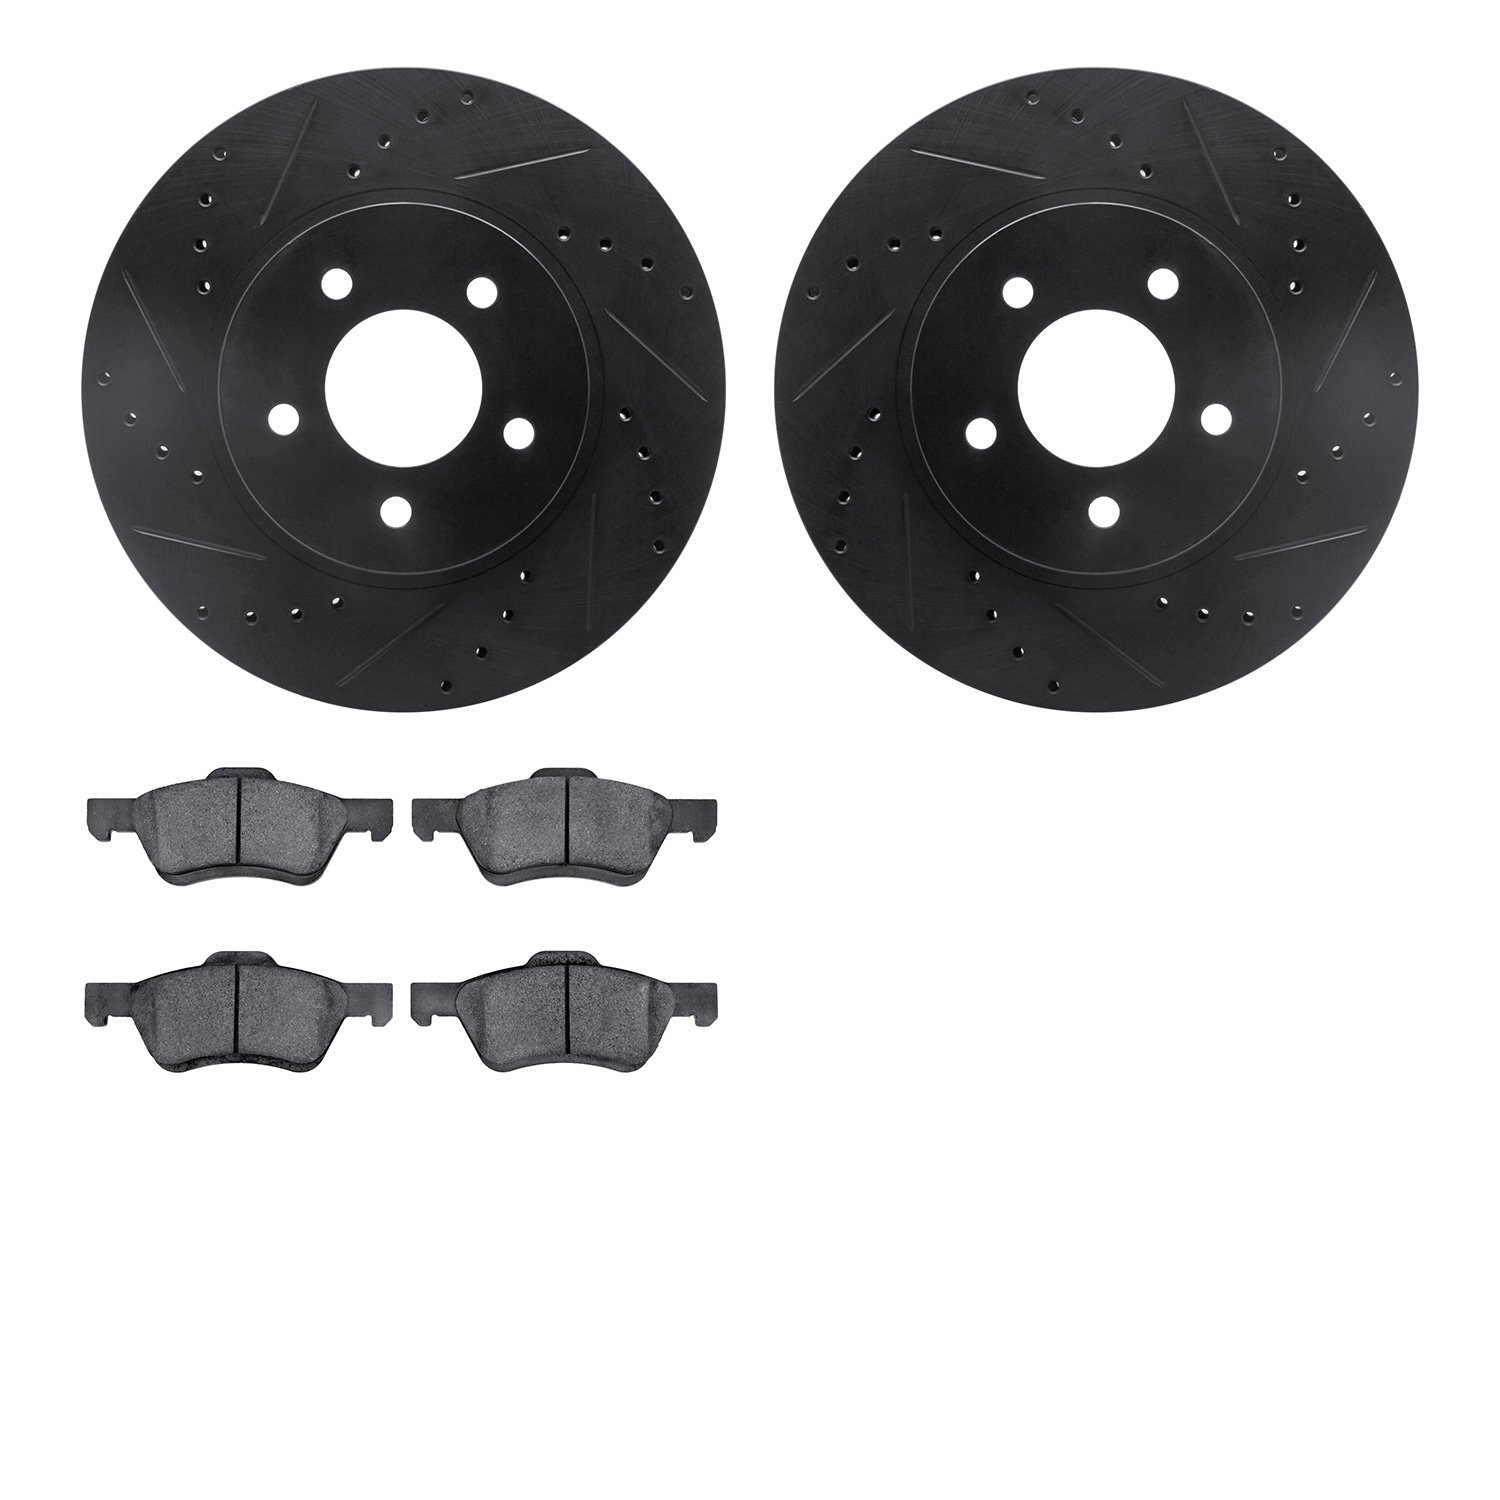 8302-54173 Drilled/Slotted Brake Rotors with 3000-Series Ceramic Brake Pads Kit [Black], 2009-2012 Ford/Lincoln/Mercury/Mazda, P